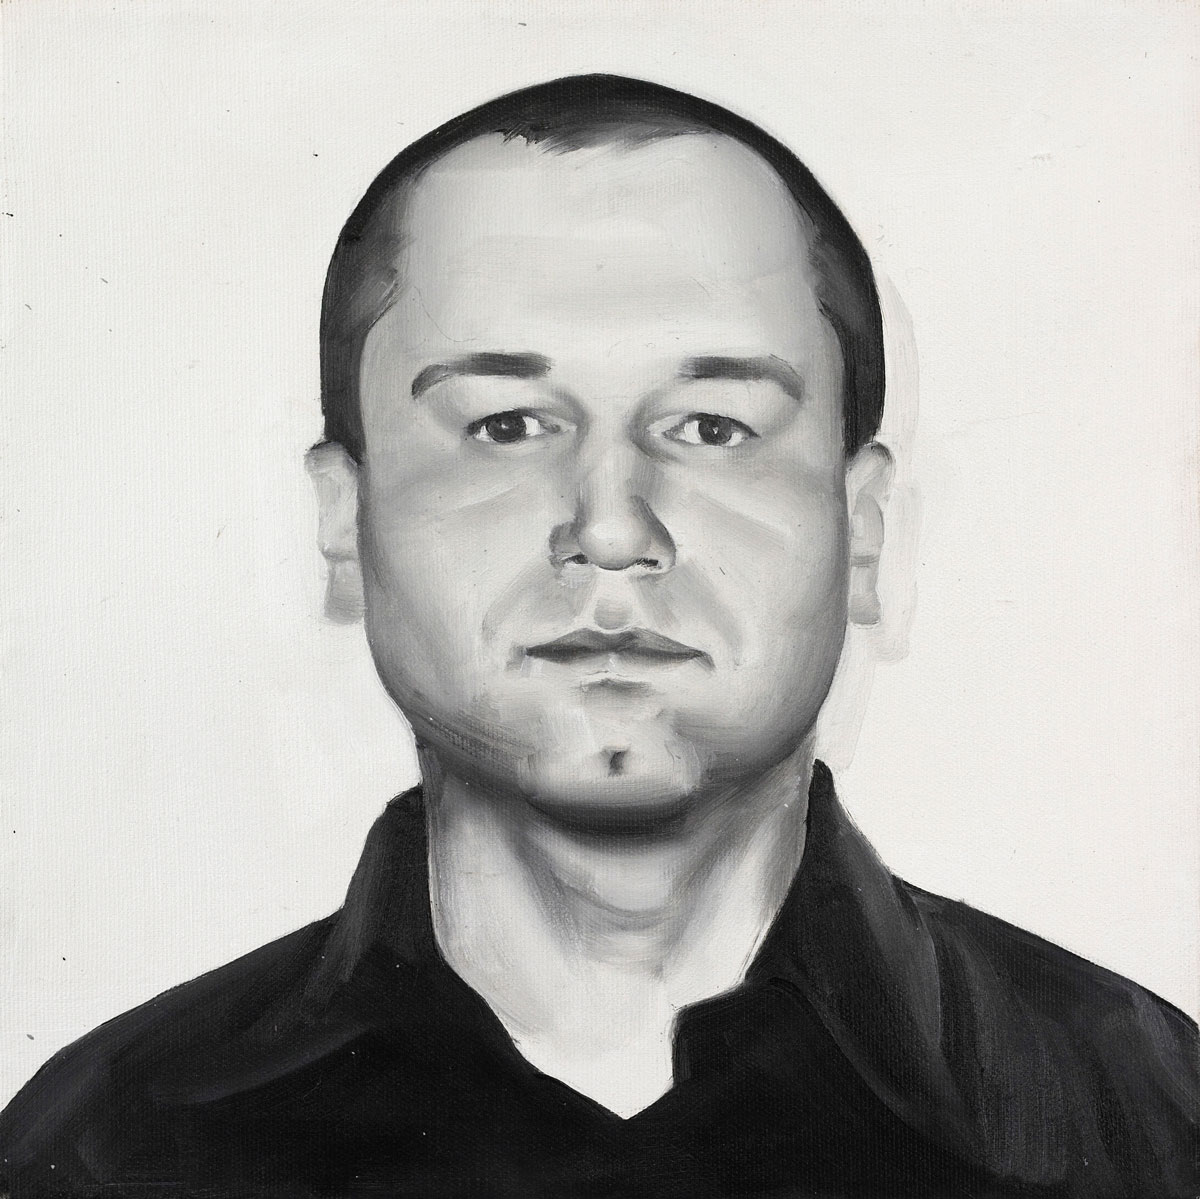 A self-portrait painting by Polish artist Rafal Bujnowski.